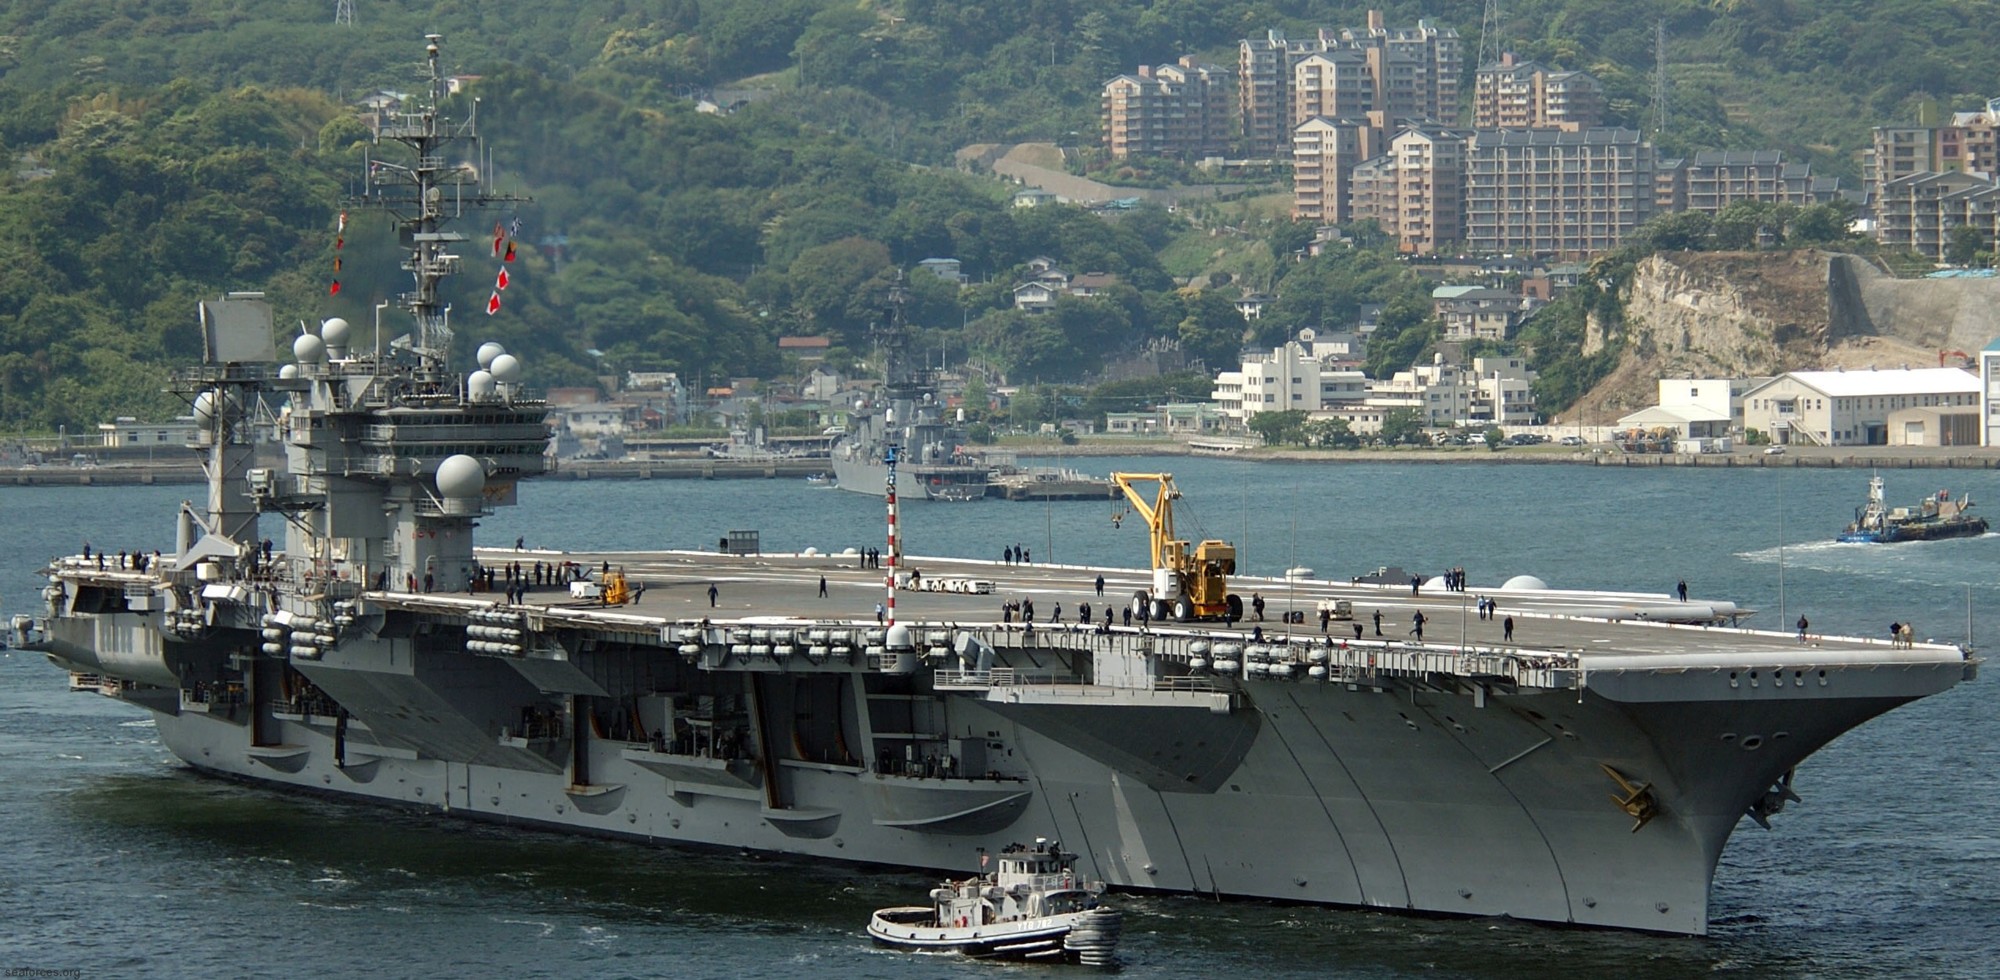 cv-63 uss kitty hawk aircraft carrier yokosuka japan fleact